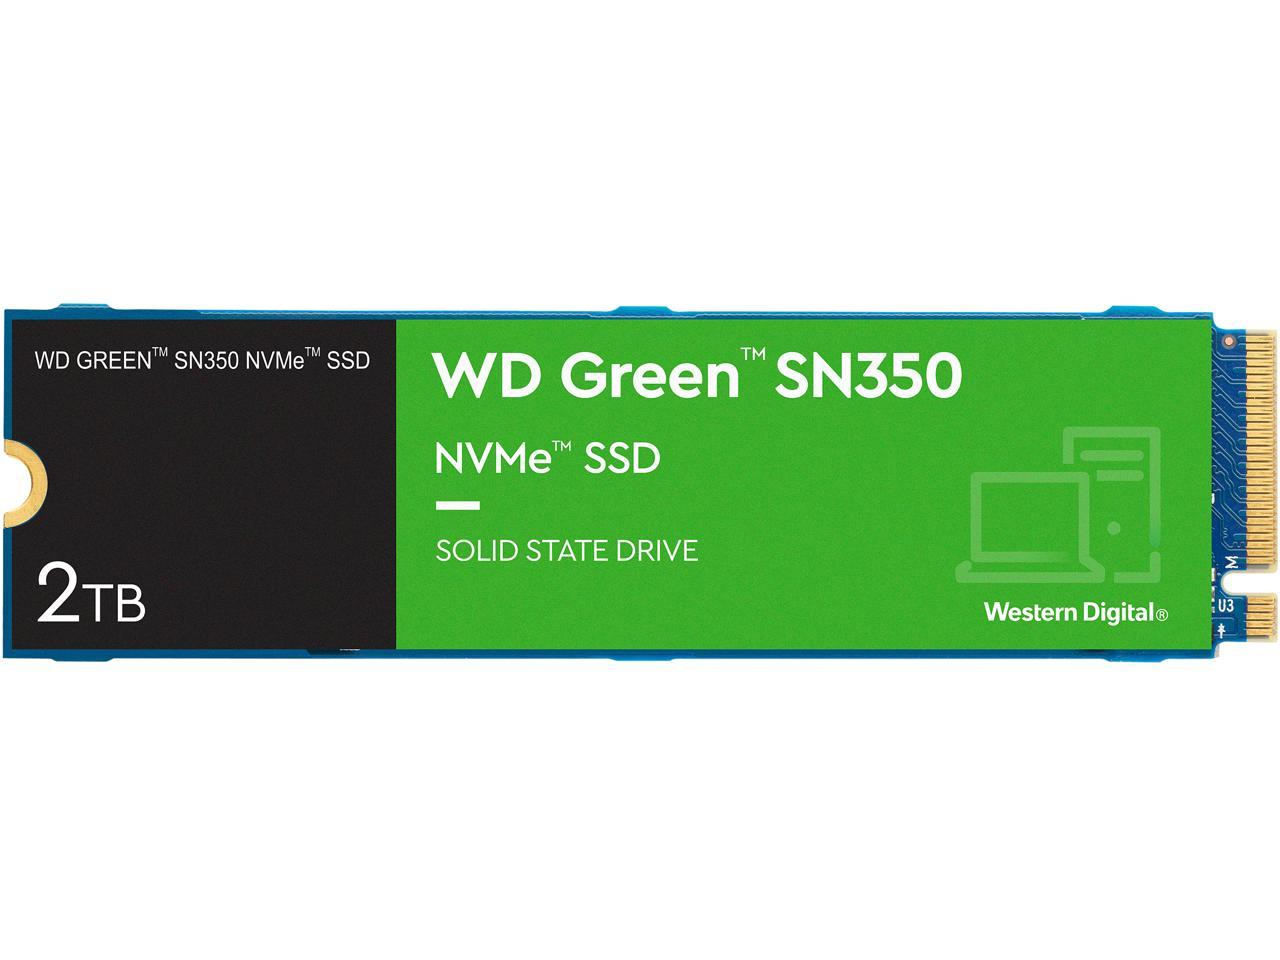 Western Digital Green SN350 NVMe M.2 2280 2TB PCI-Express 3.0 x4 SSD $99.99